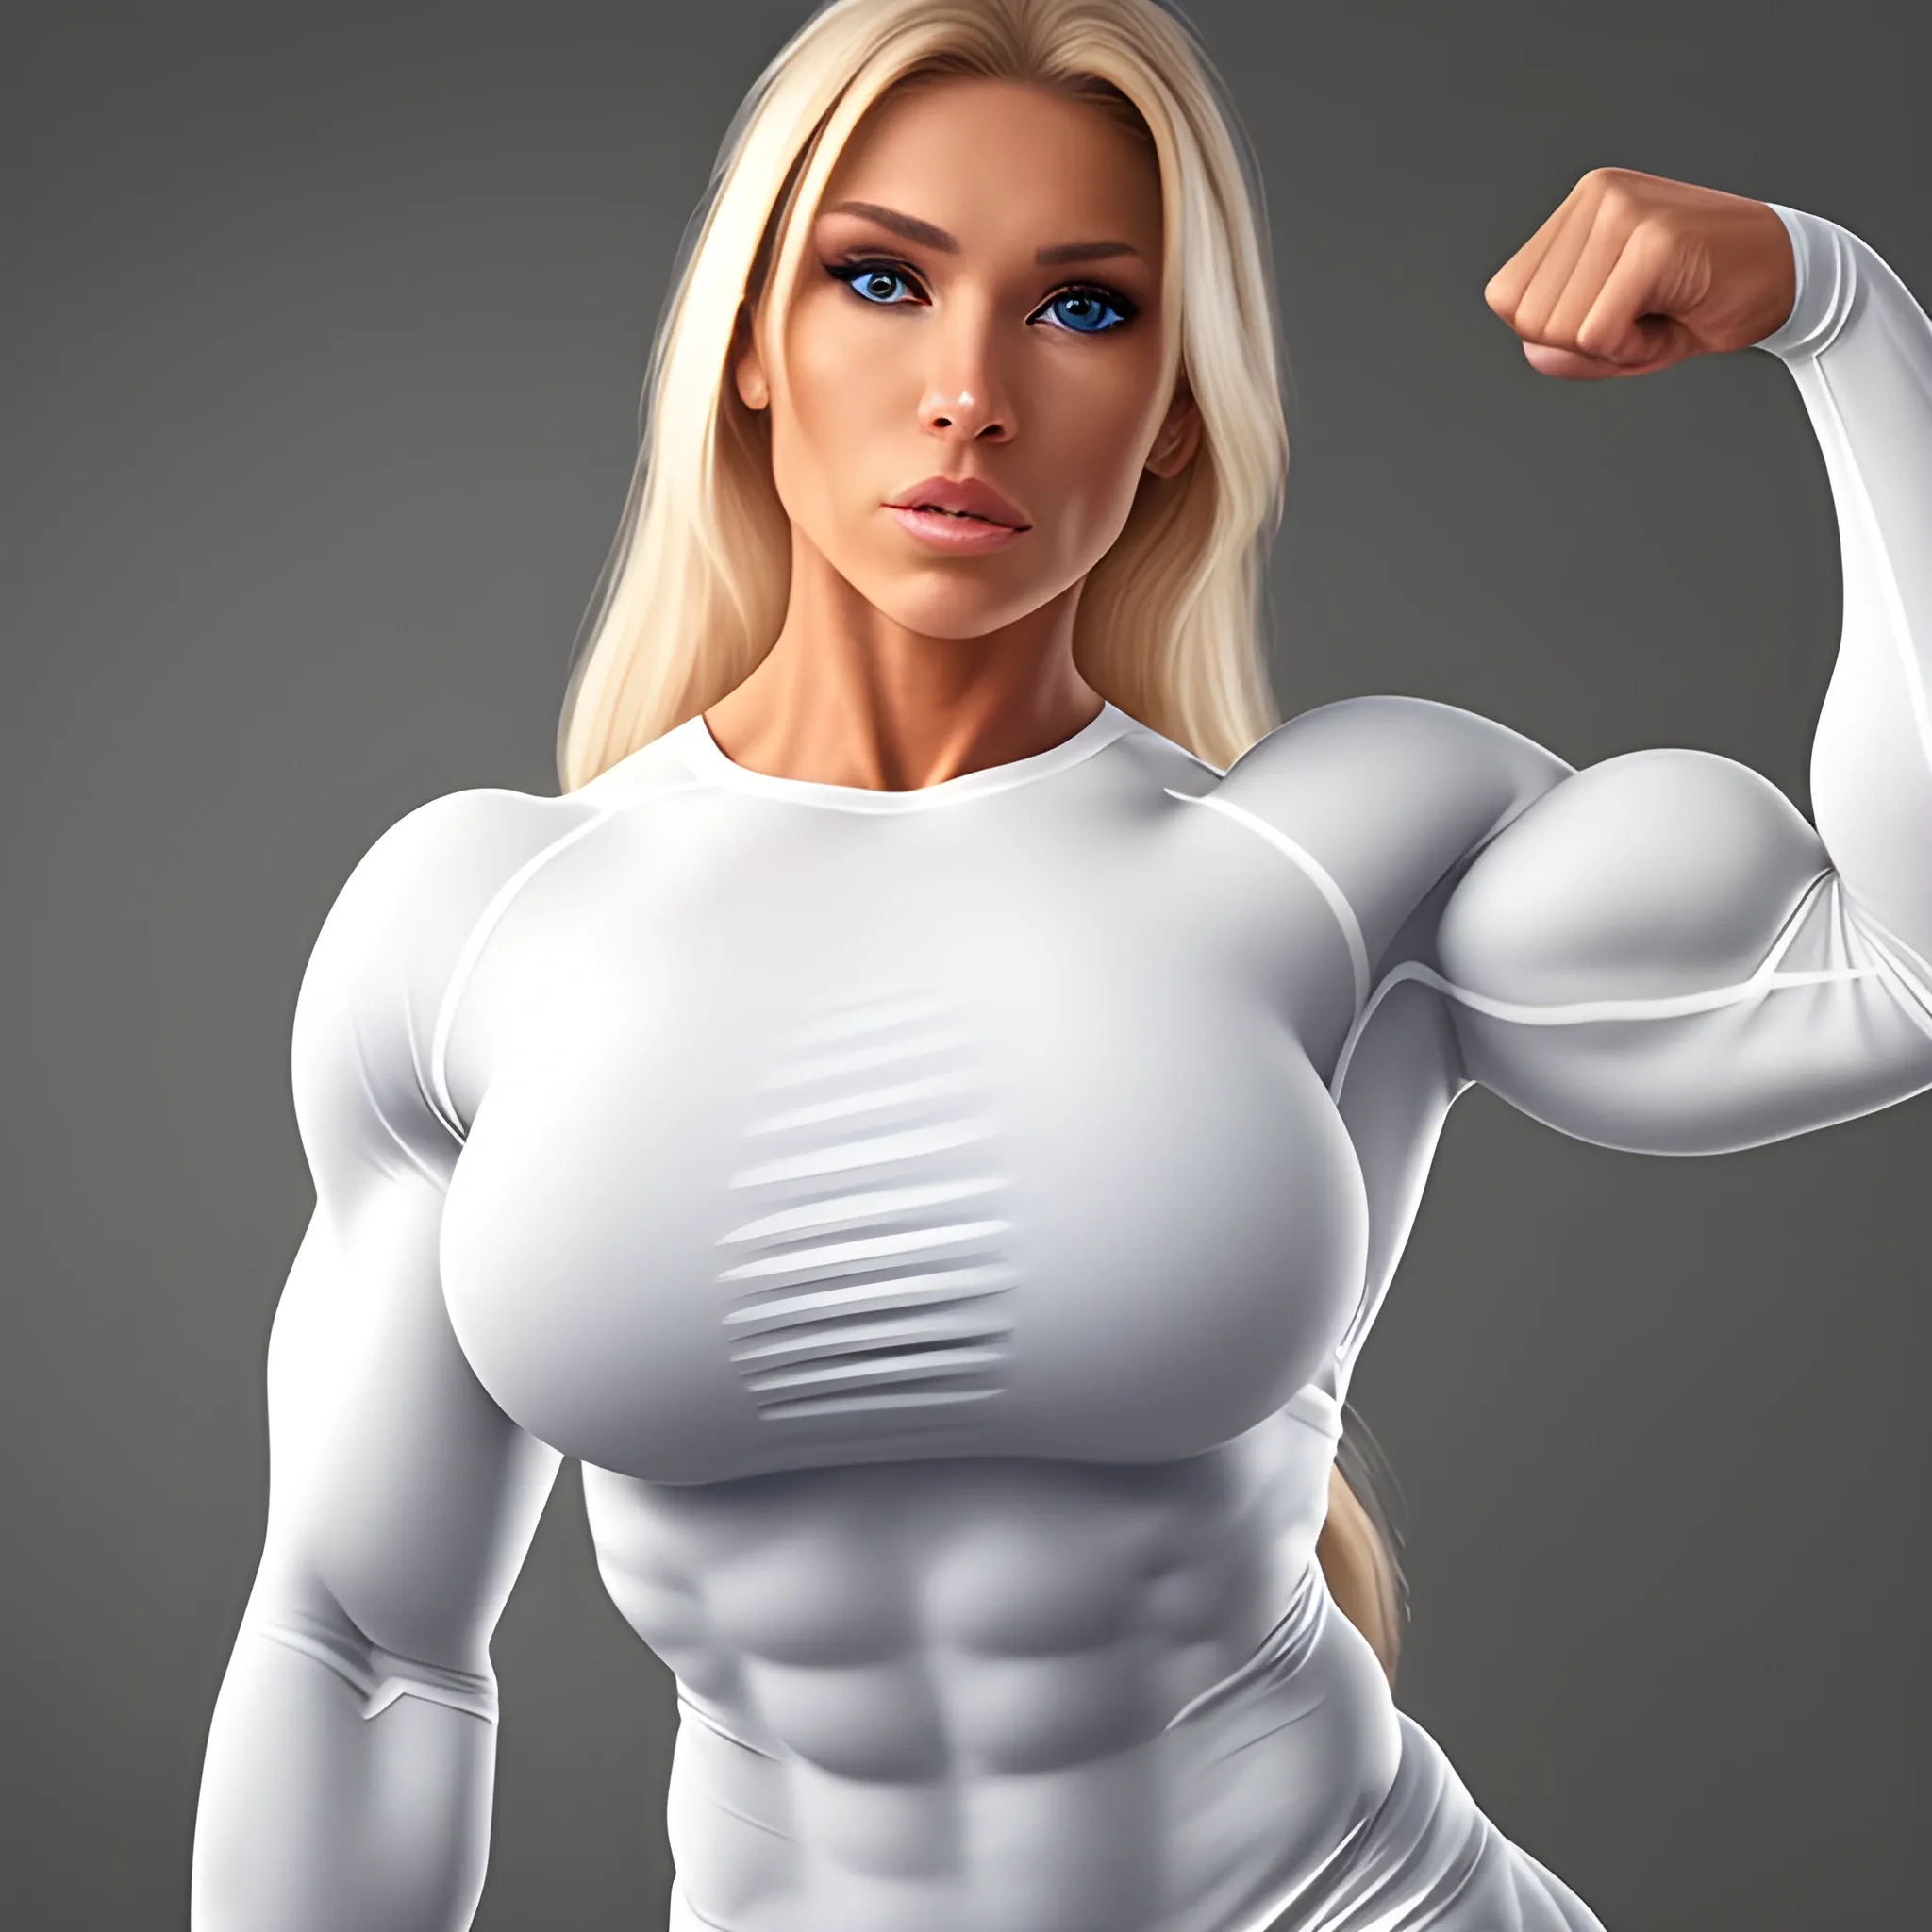 Photorealistic supermodel gorgeous female bodybuilder, wearing tight white long sleeve shirt